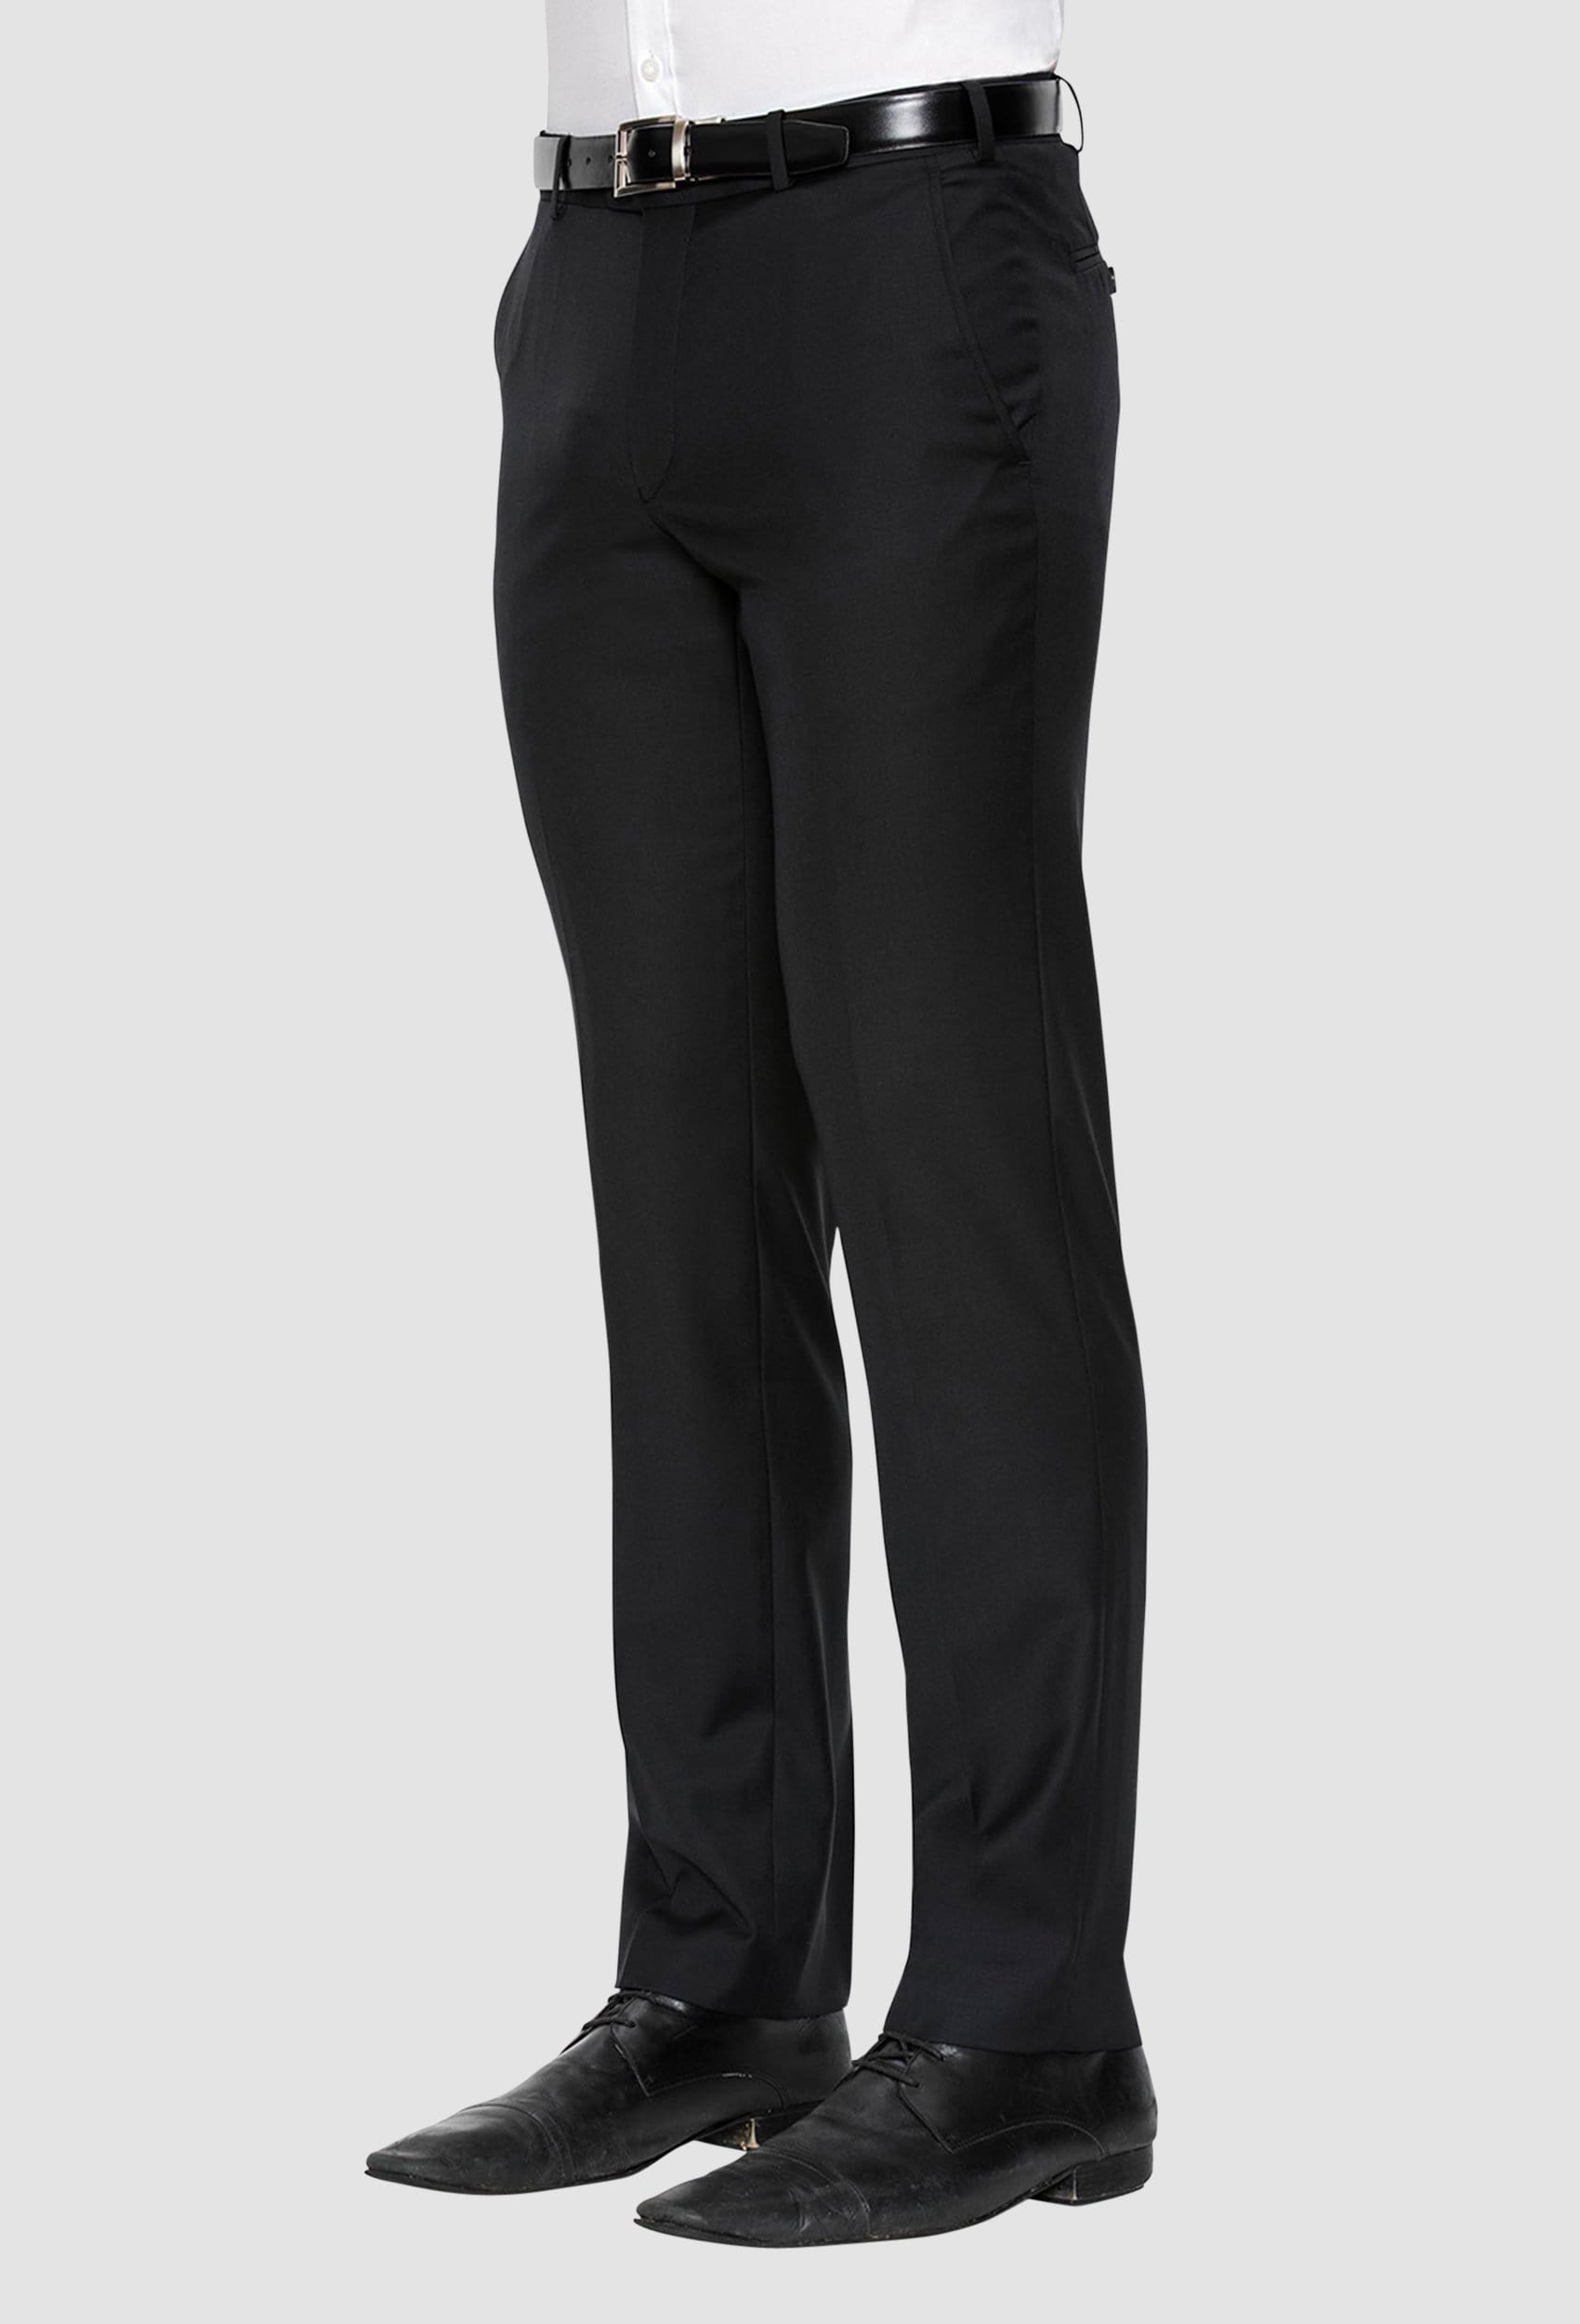 Cambridge classic fit jett mens trouser in black - Business Suit ...